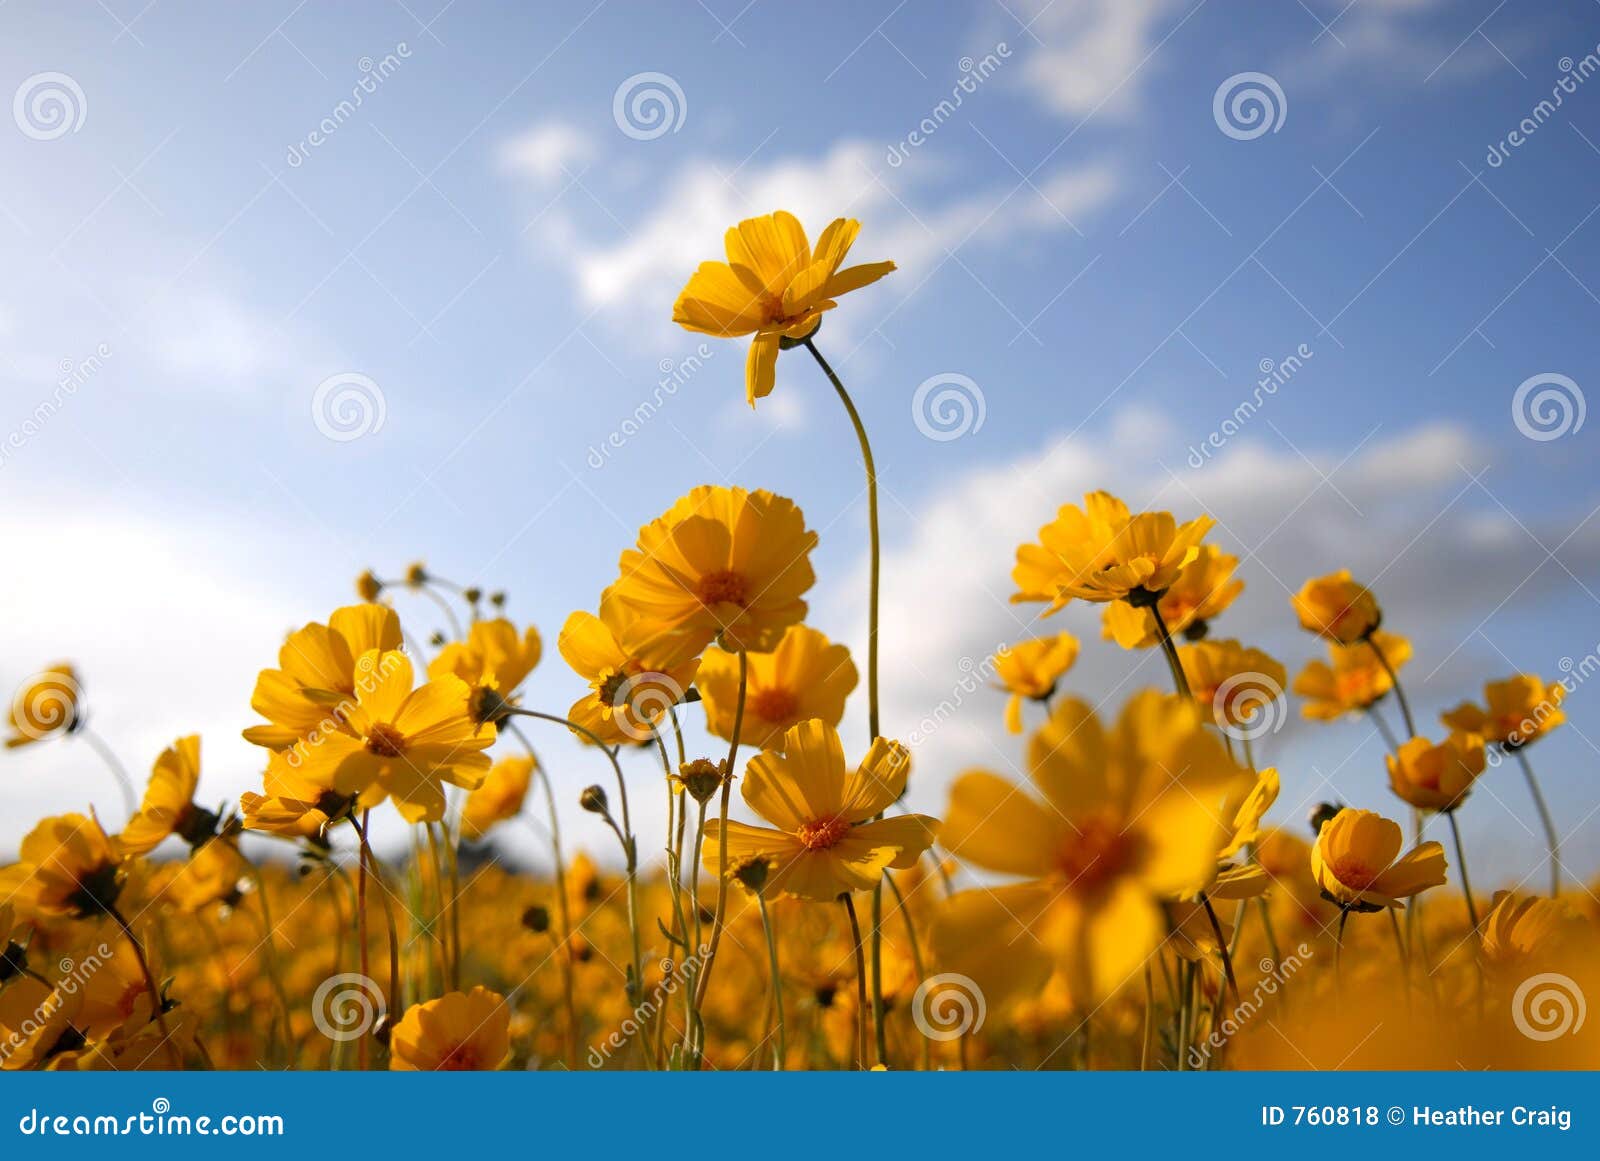 mooie-wilde-bloemen-gele-2-760818.jpg